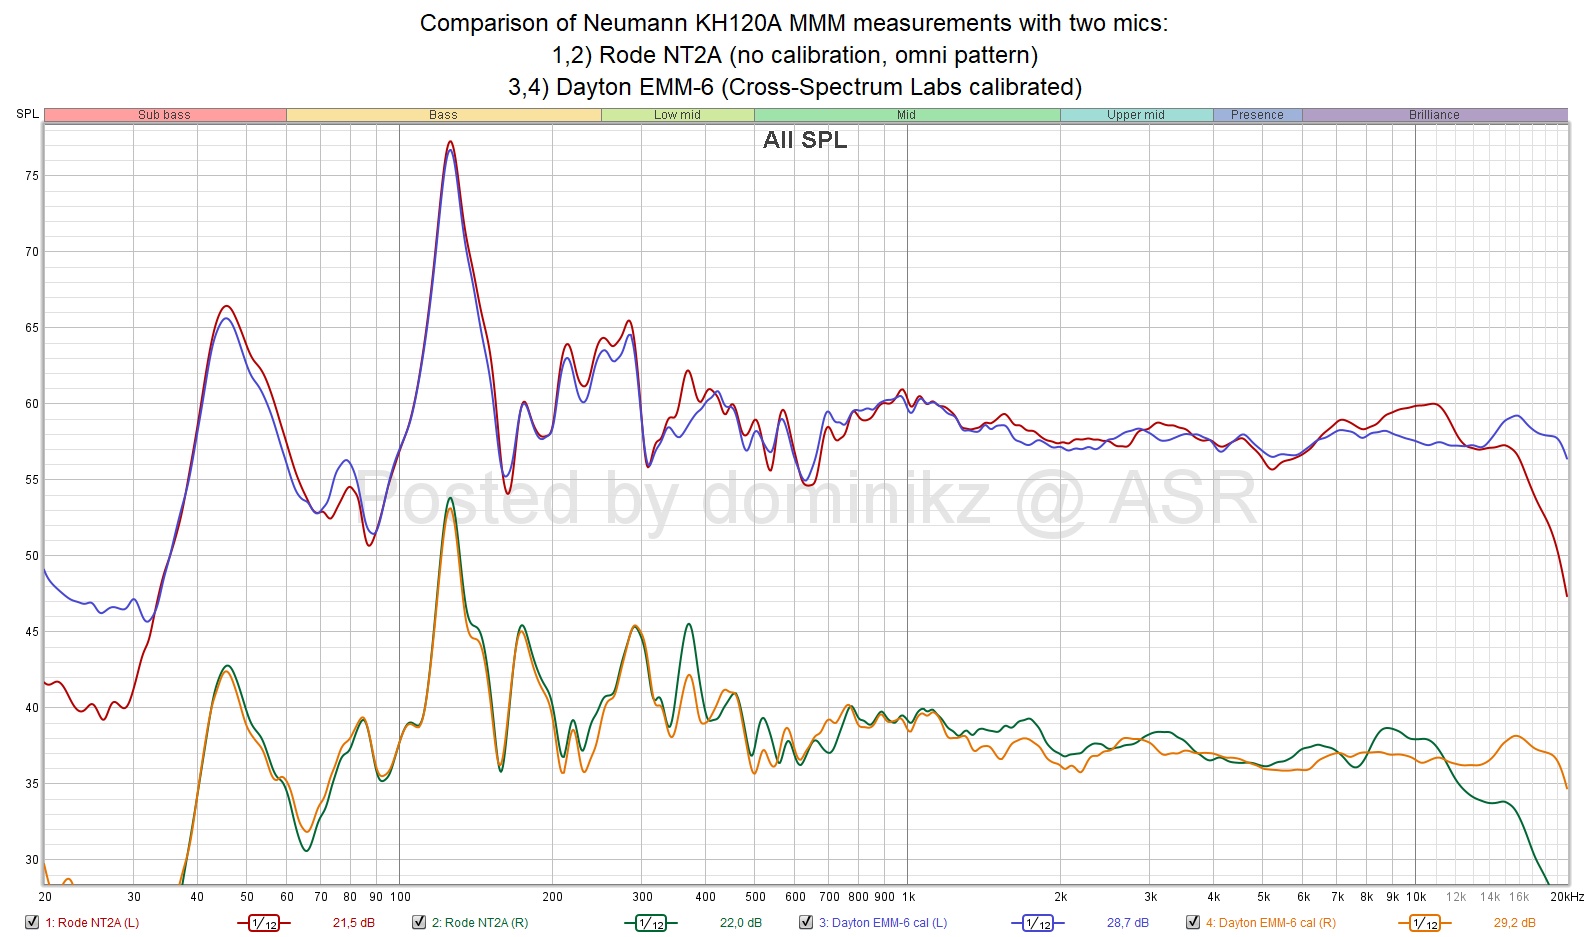 Comparison of MMM measurements - Rode NT2A vs Dayton EMM-6.jpg